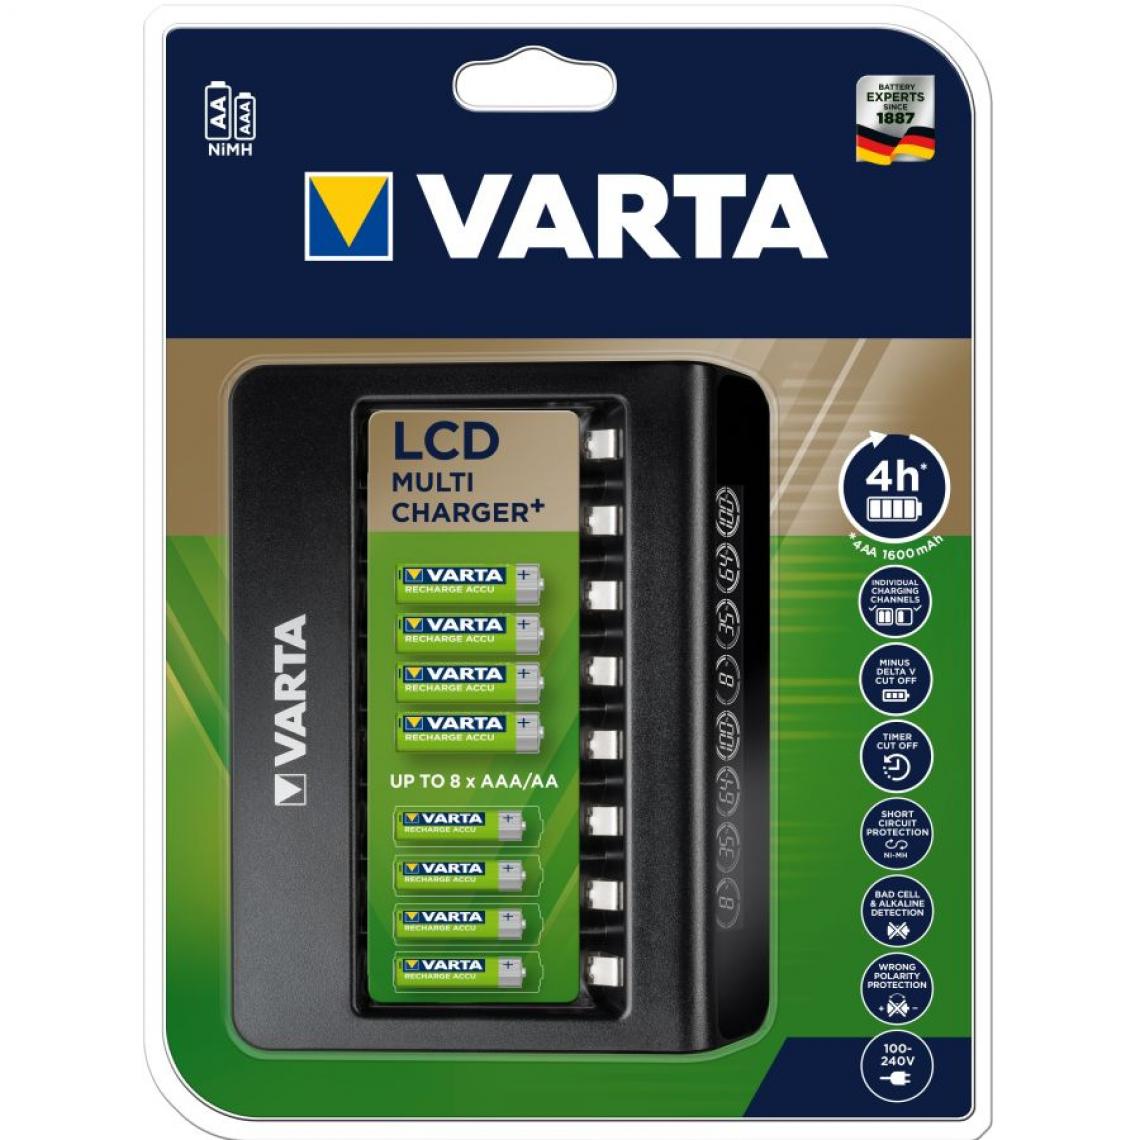 Varta - Chargeur VARTA LCD multichargeur - 8 canaux - 57681101401 - Piles rechargeables